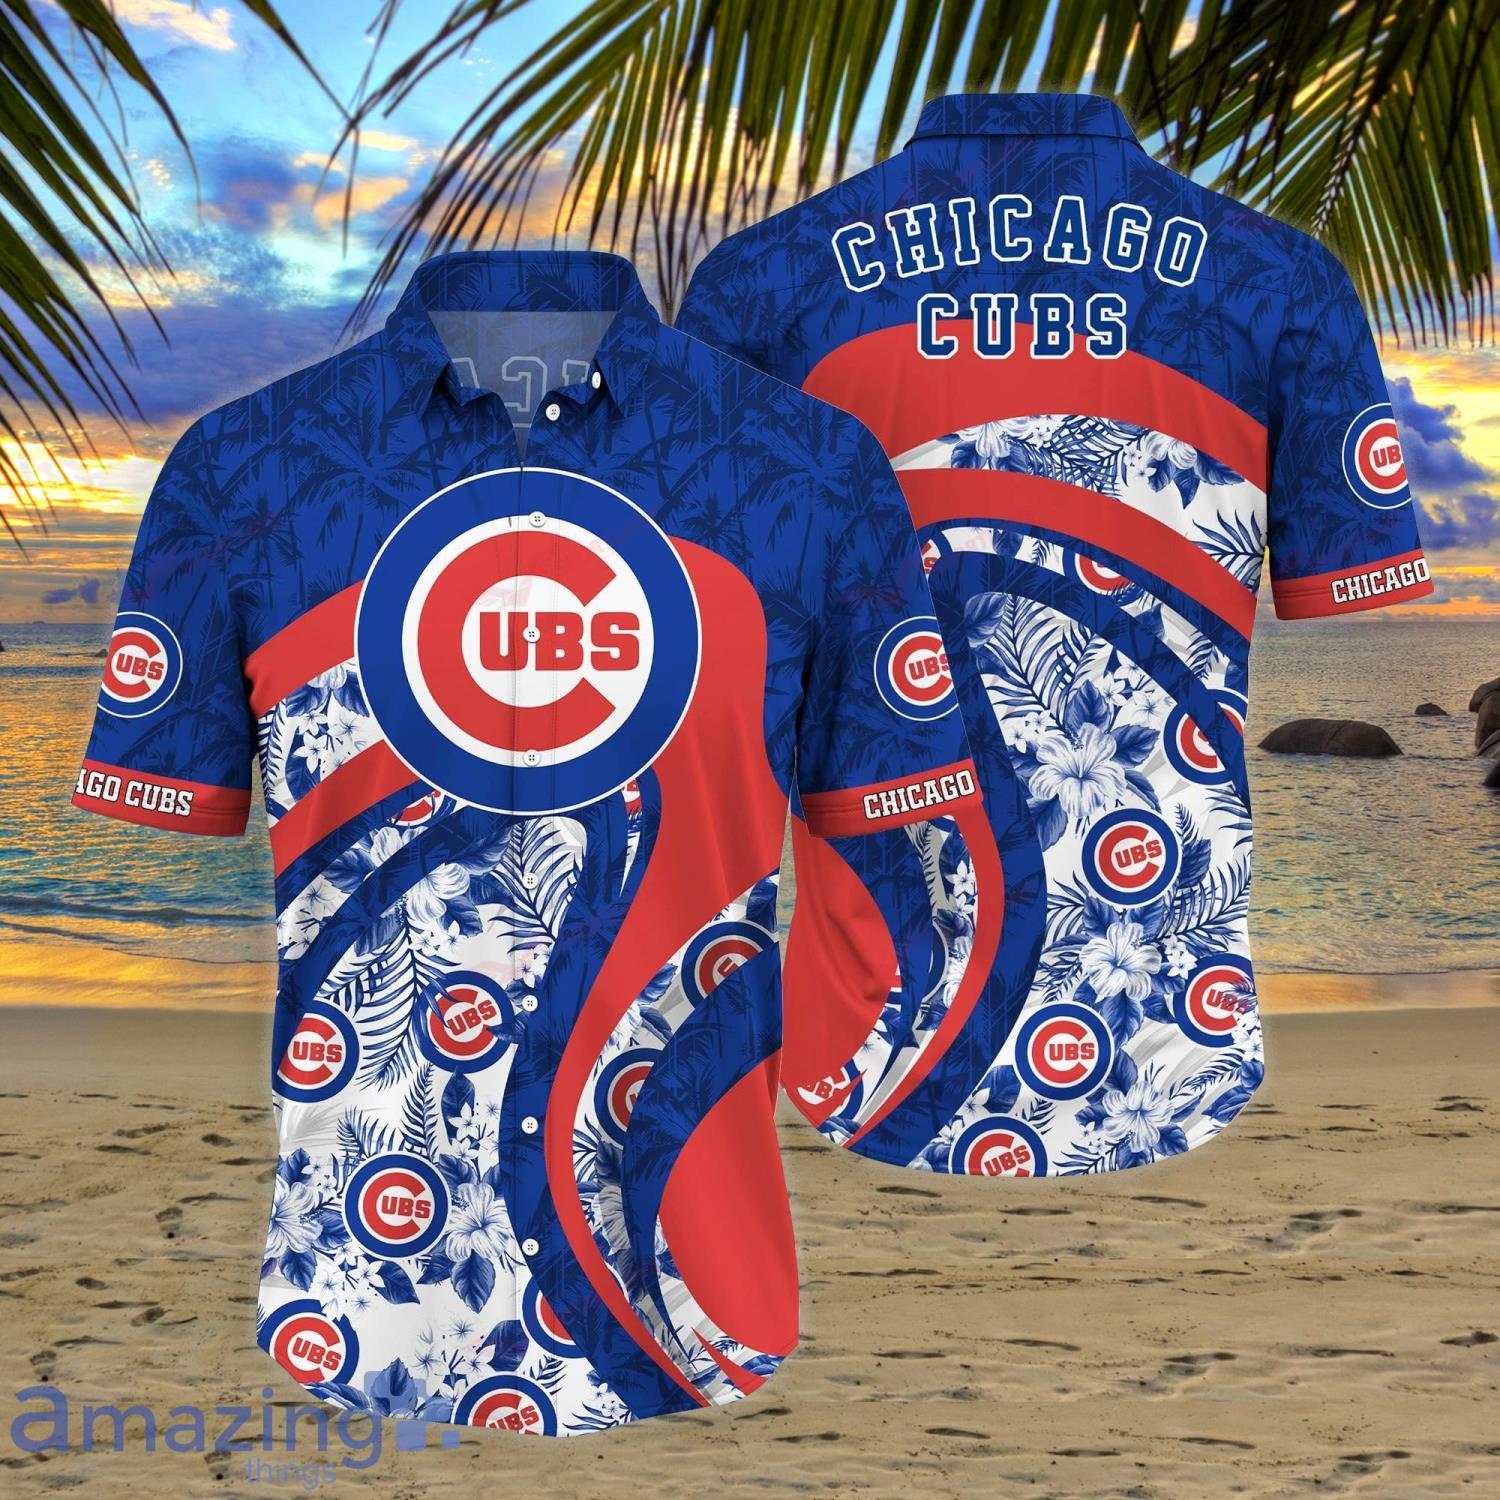 Chicago Cubs MLB For Sports Fan Full Print Hawaiian Shirt - Senprintmart  Store